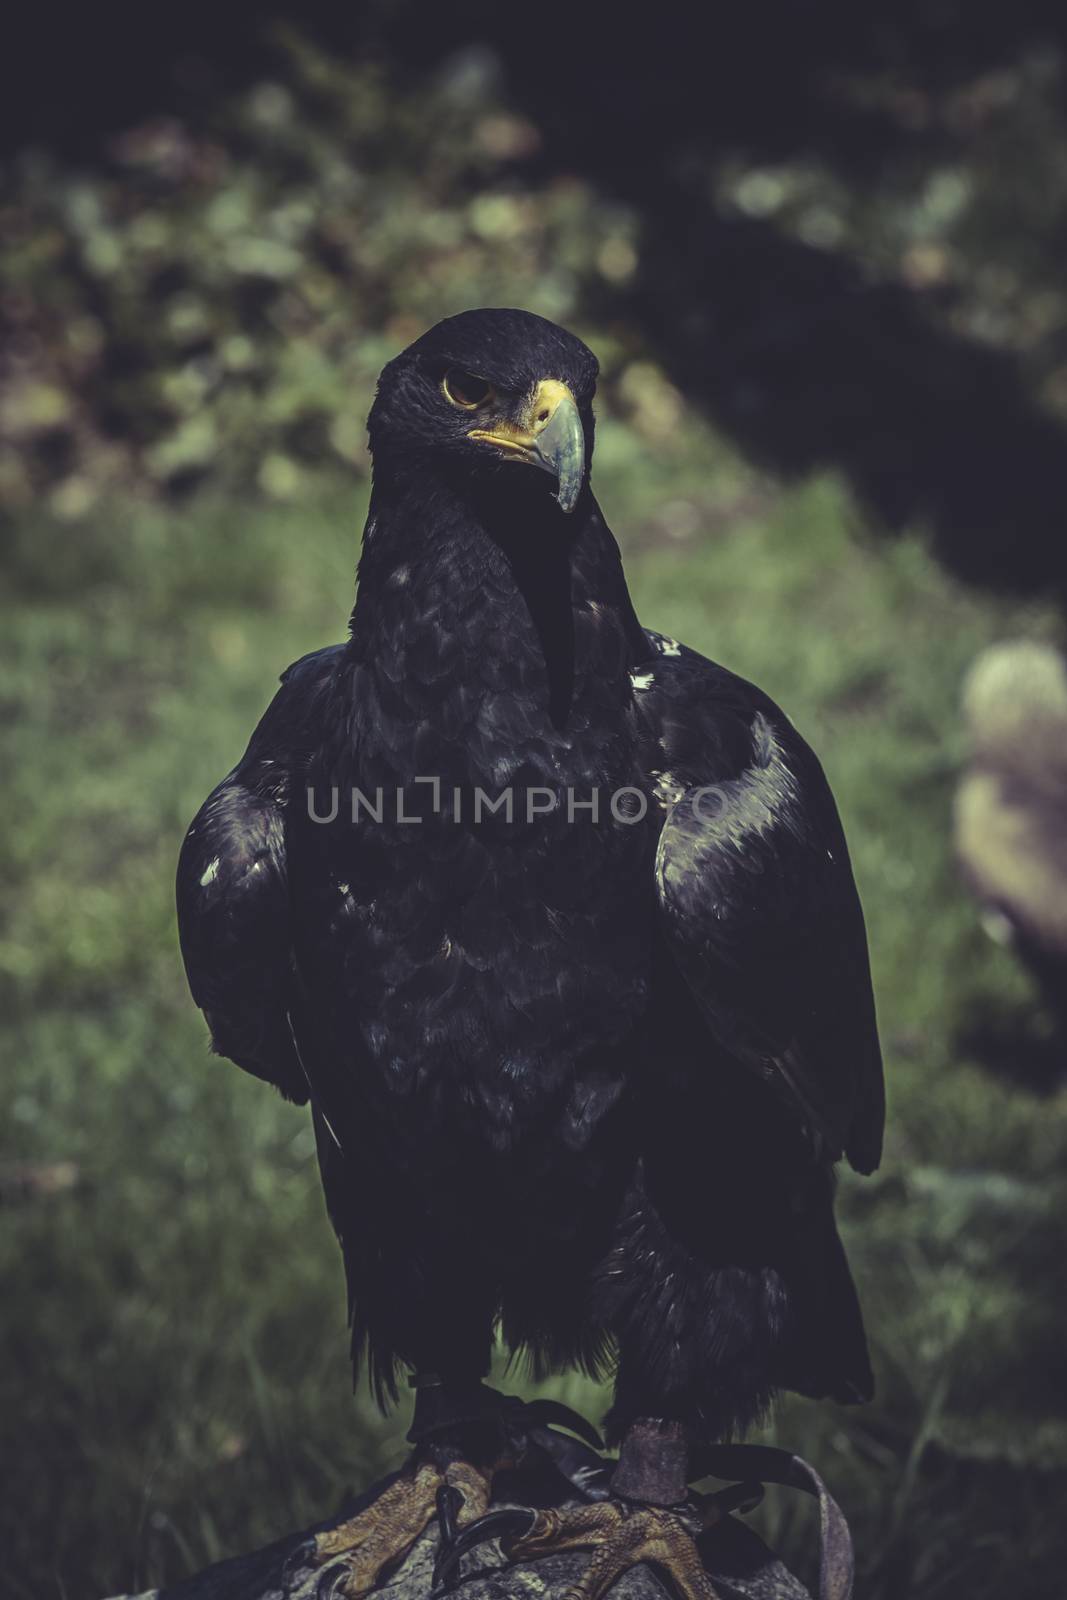 Black eagle with yellow peak by FernandoCortes